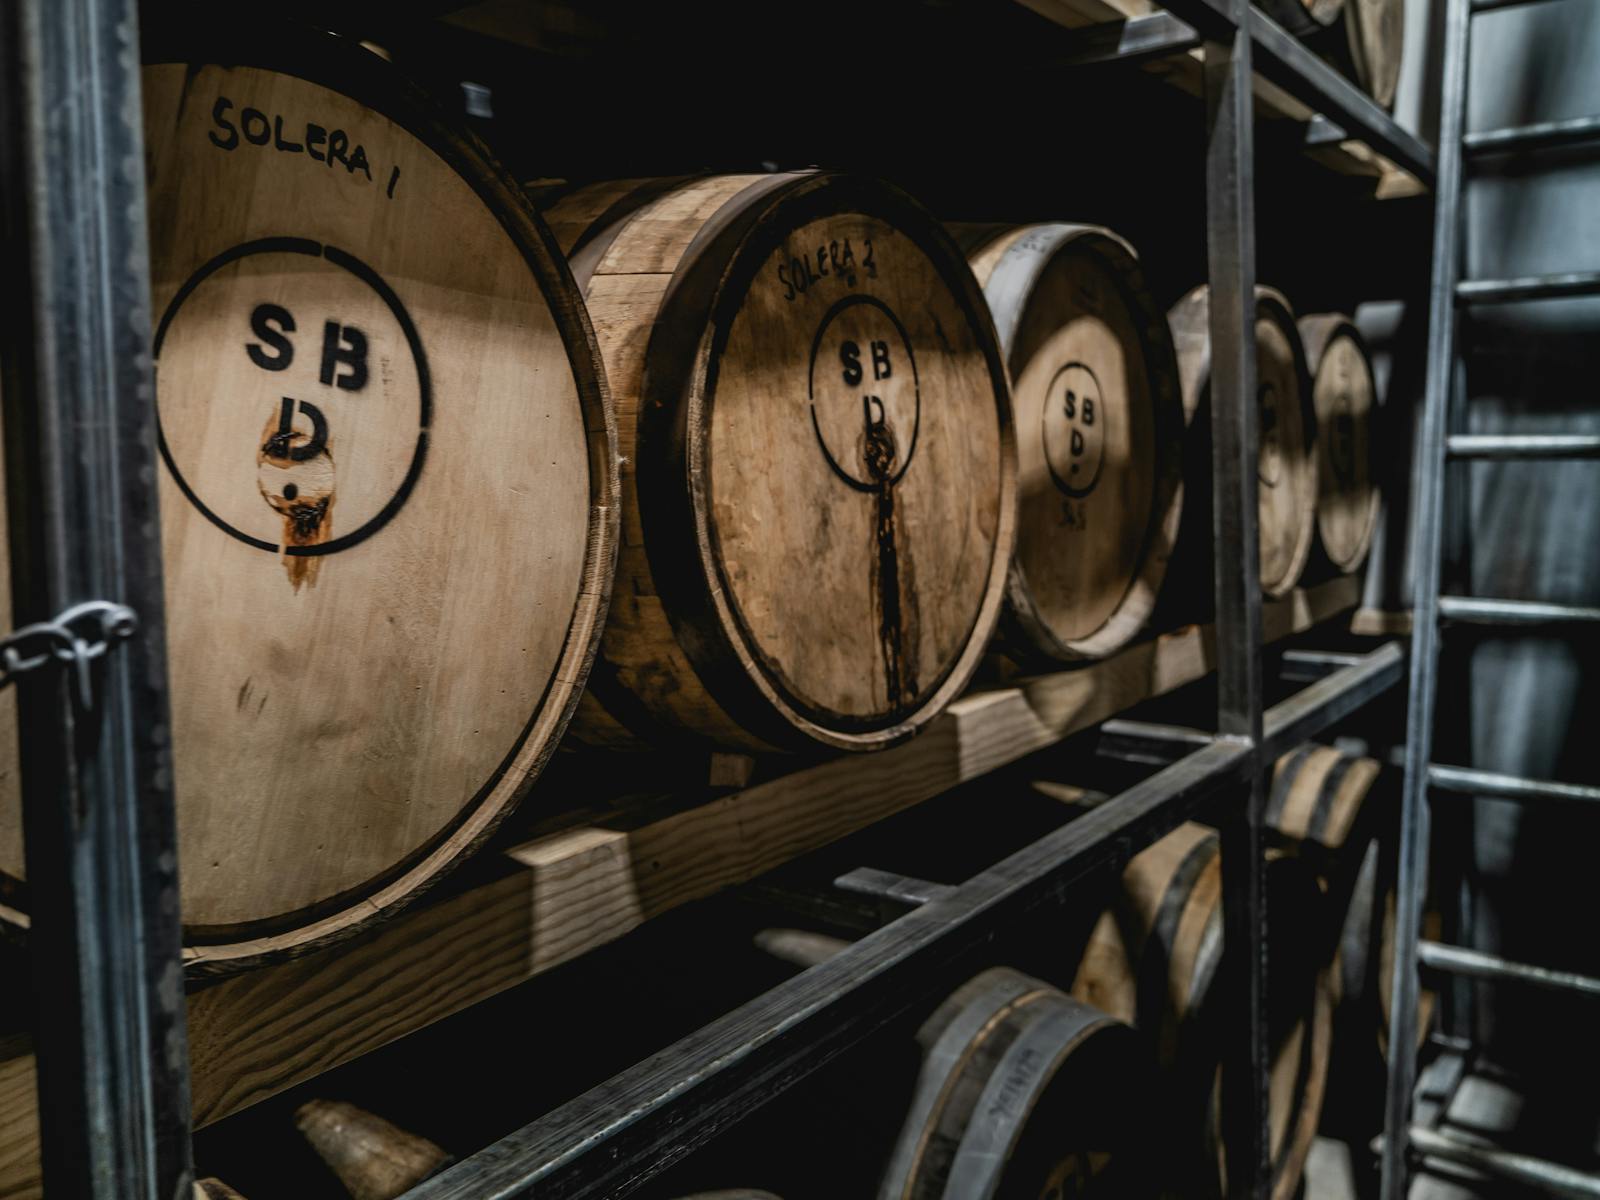 Whisky Barrels in racking